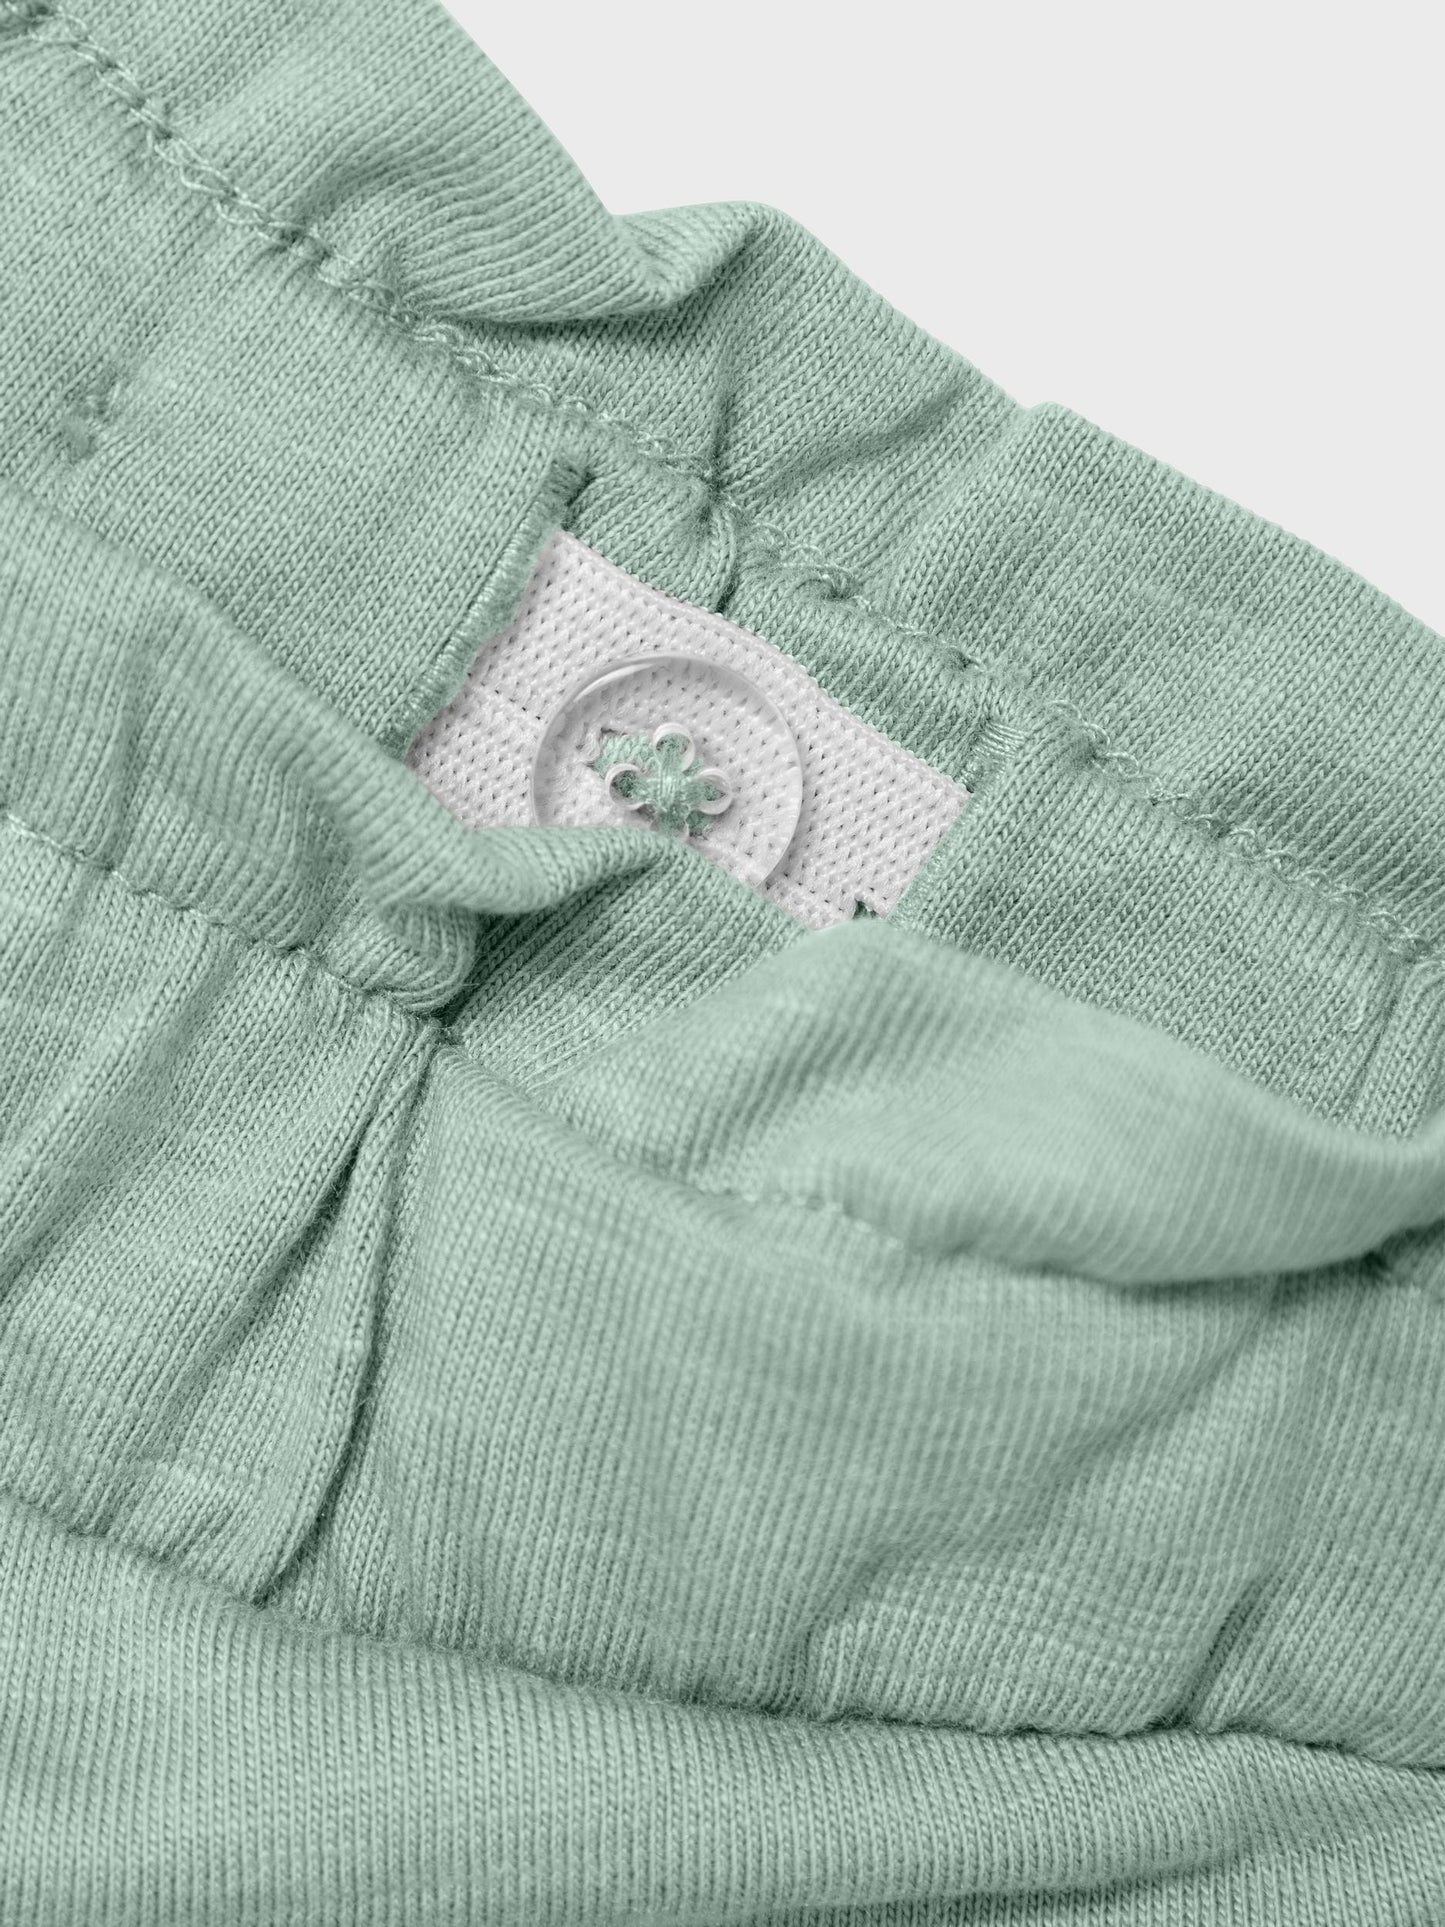 Name it - Hubbi shorts - Silt green